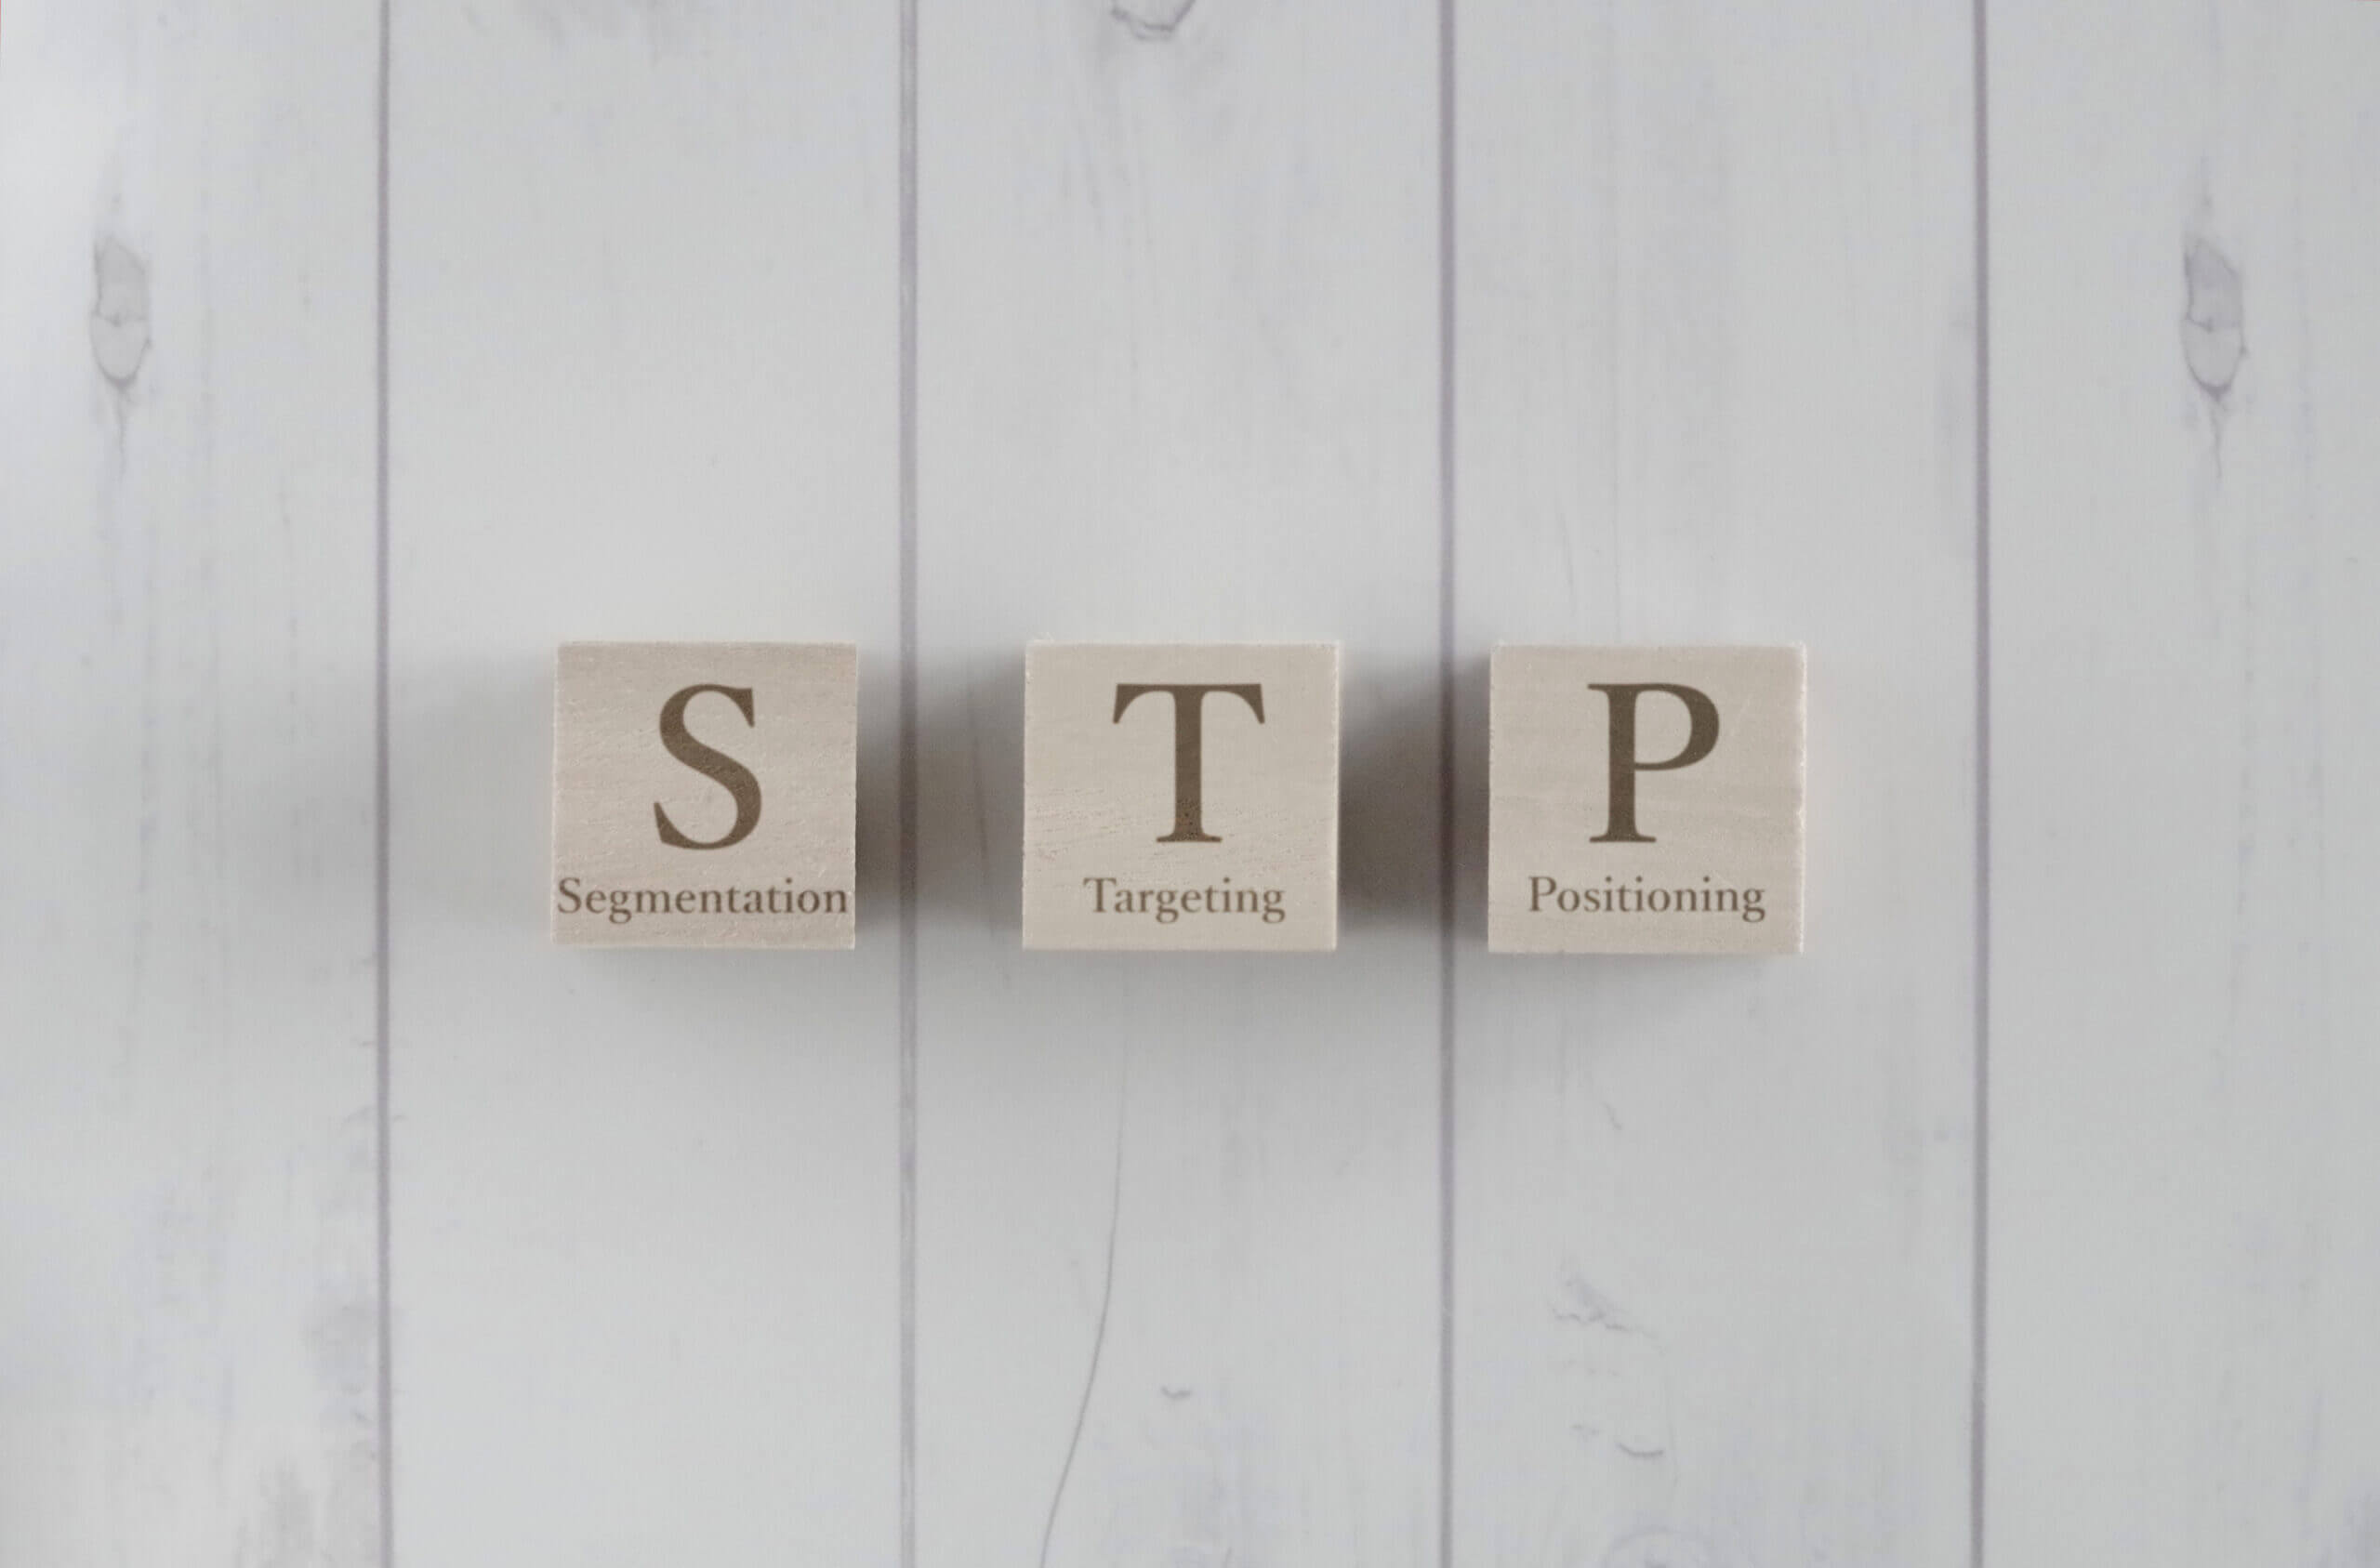 STP分析イメージ